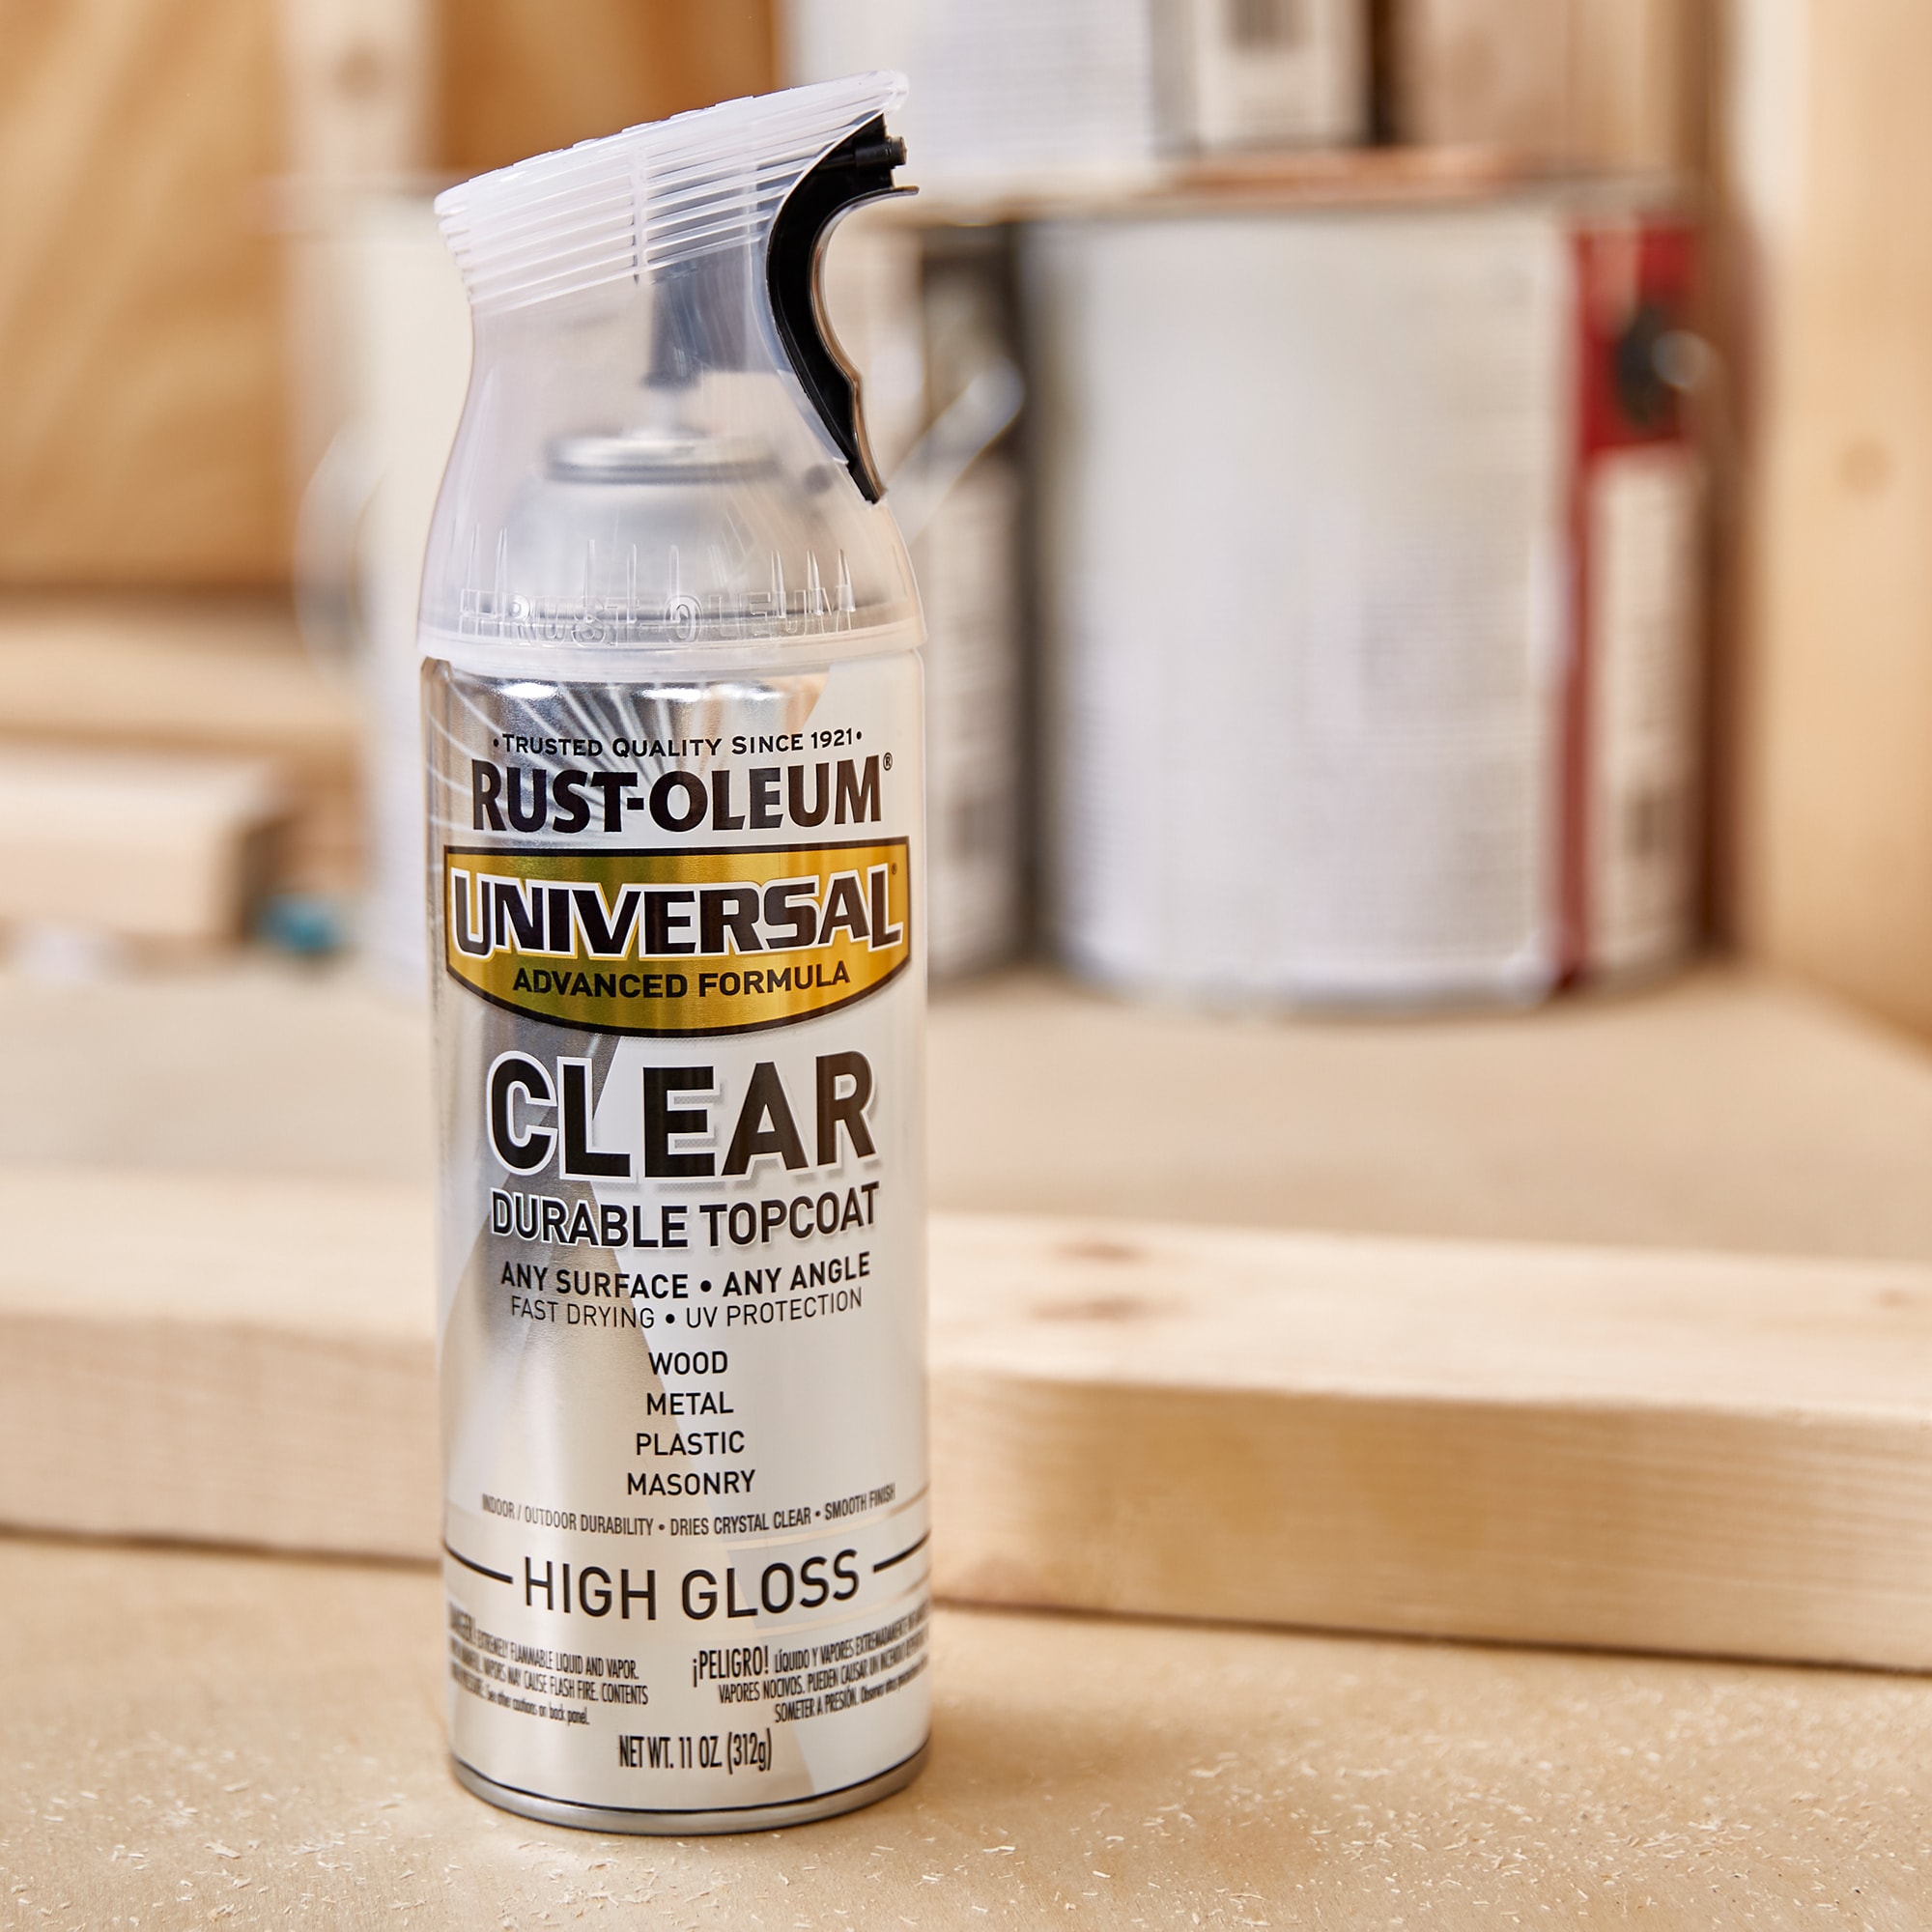 Clear, Rust-Oleum Stops Rust Advanced Gloss Spray Paint, 12 oz 